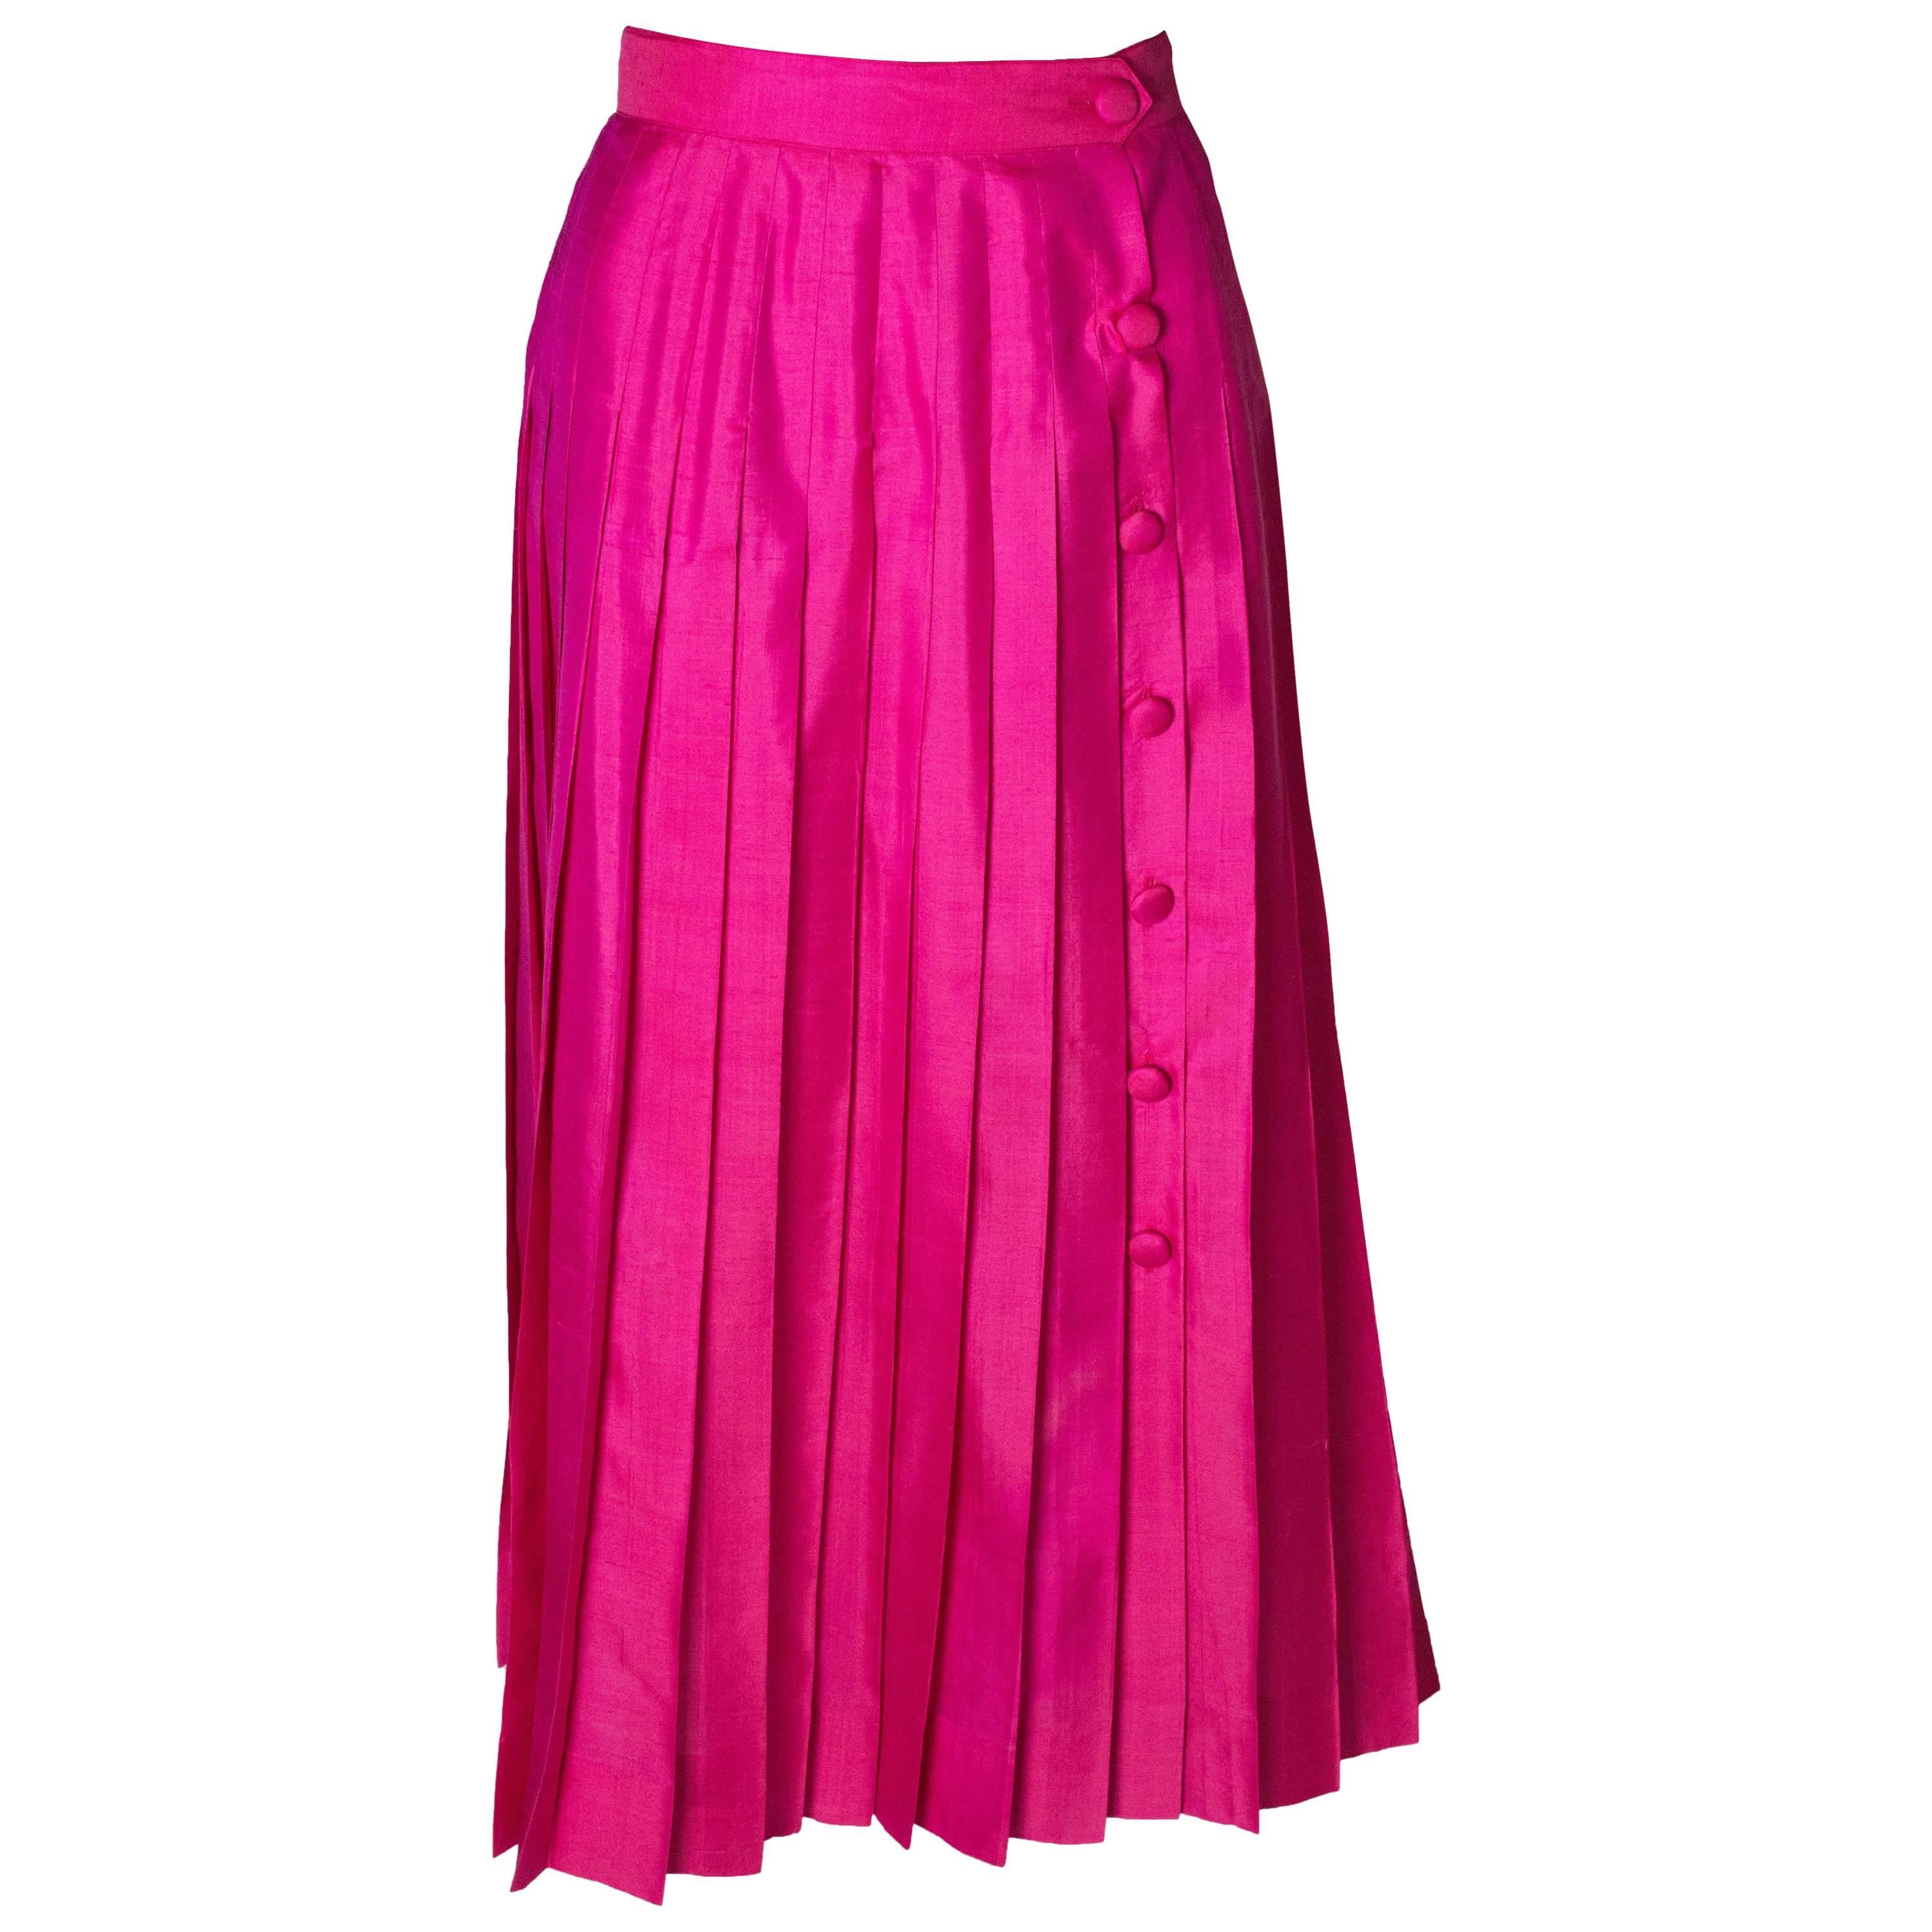 A Vintage 1970s silk high waisted pleated day skirt